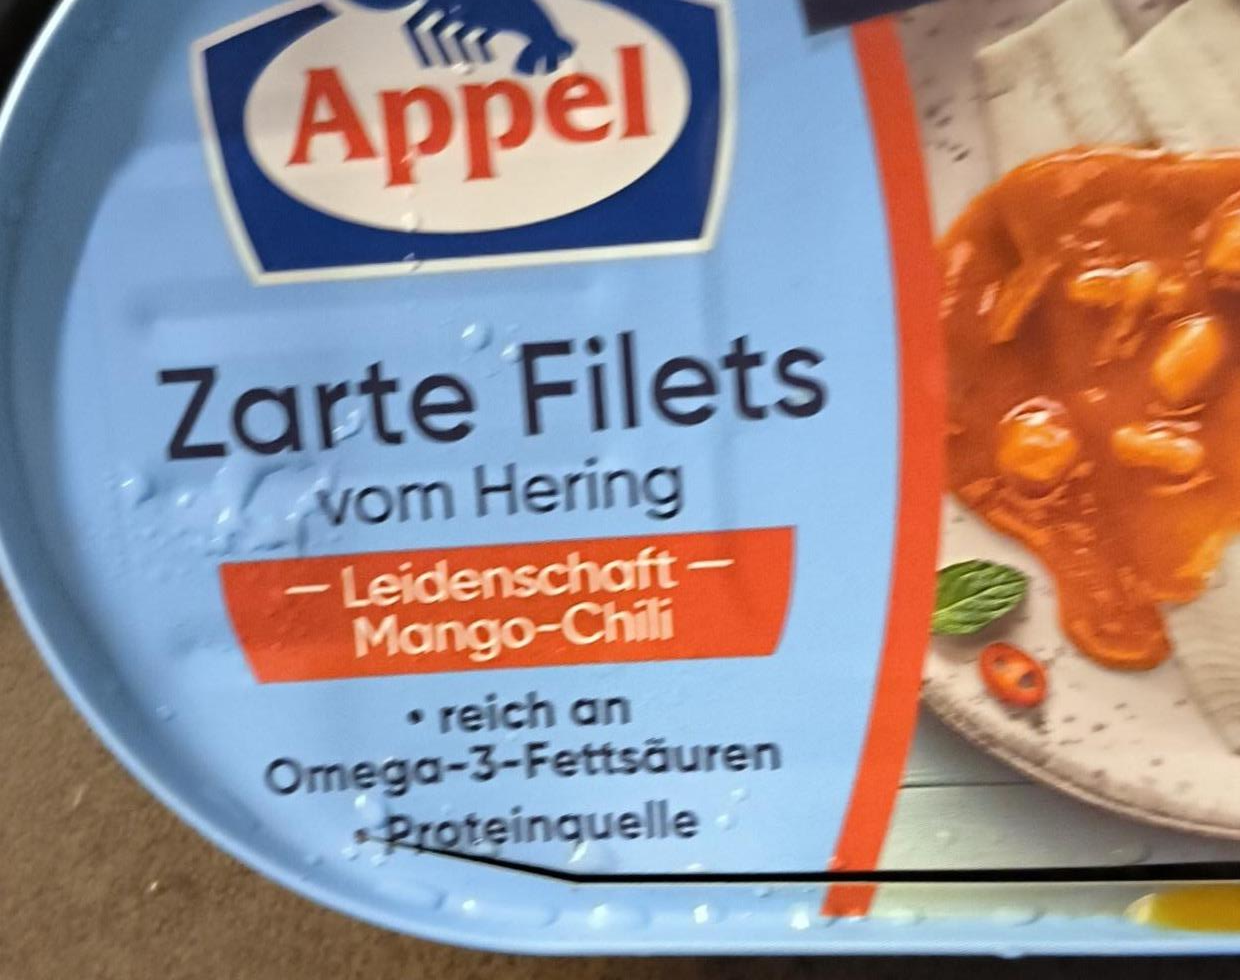 Zdjęcia - Zarte Filets vom Hering Mango Chilli Appel